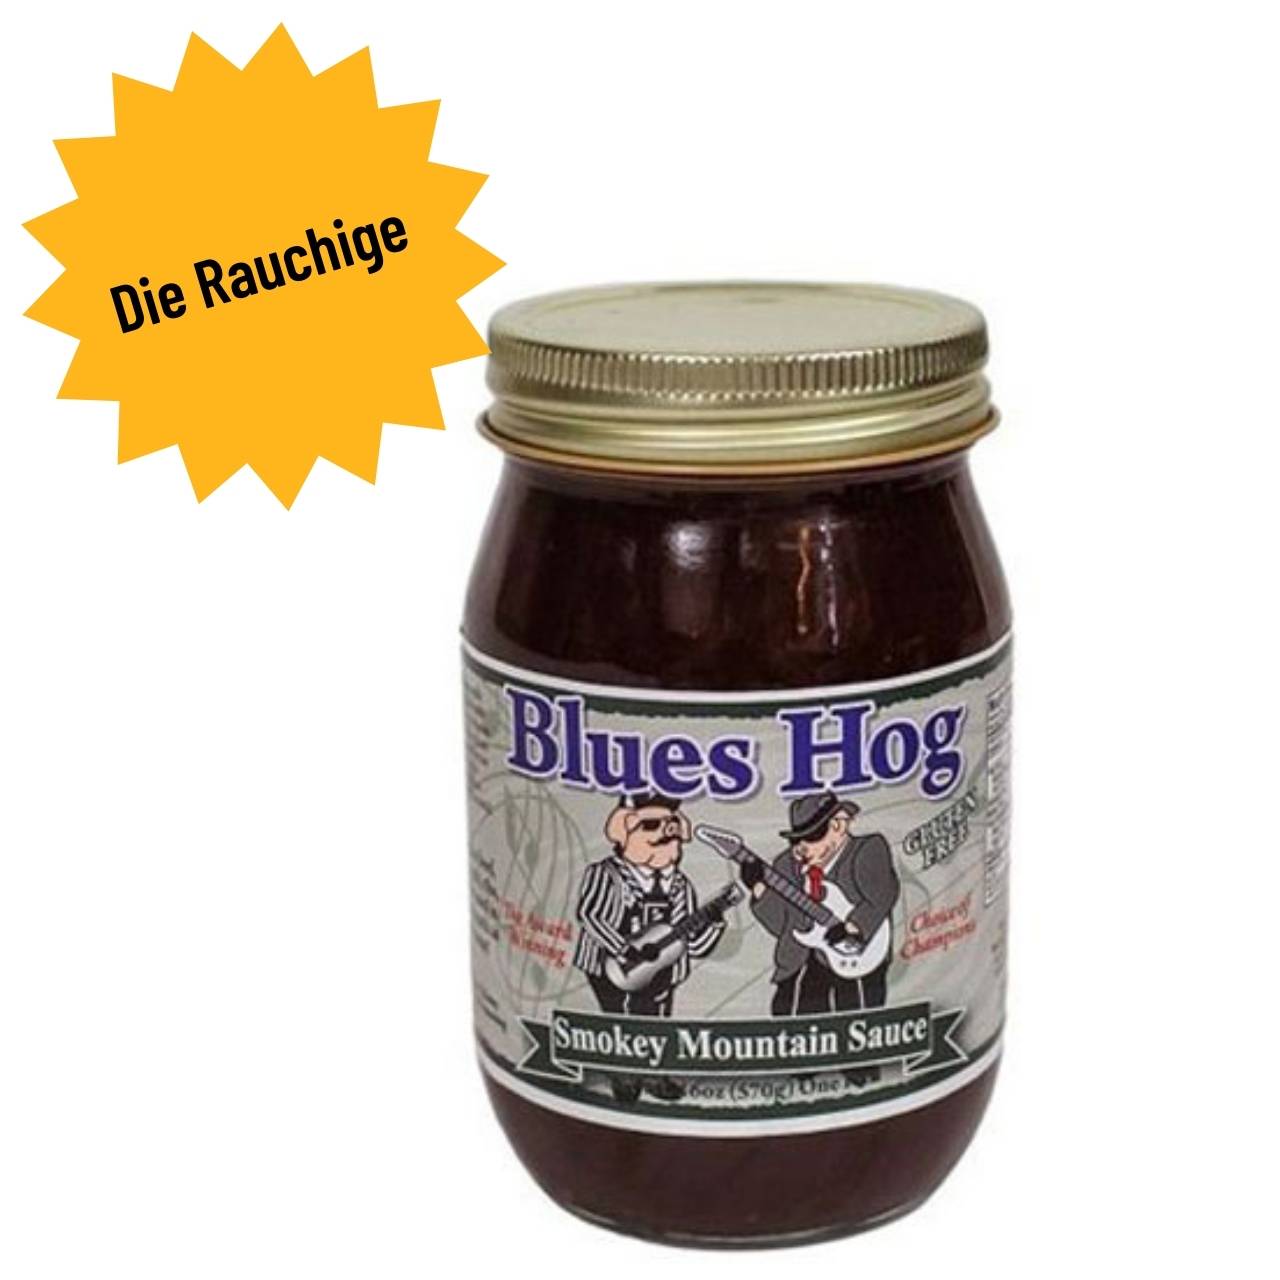 Blues Hog - Smokey Mountain Sauce, 562 ml